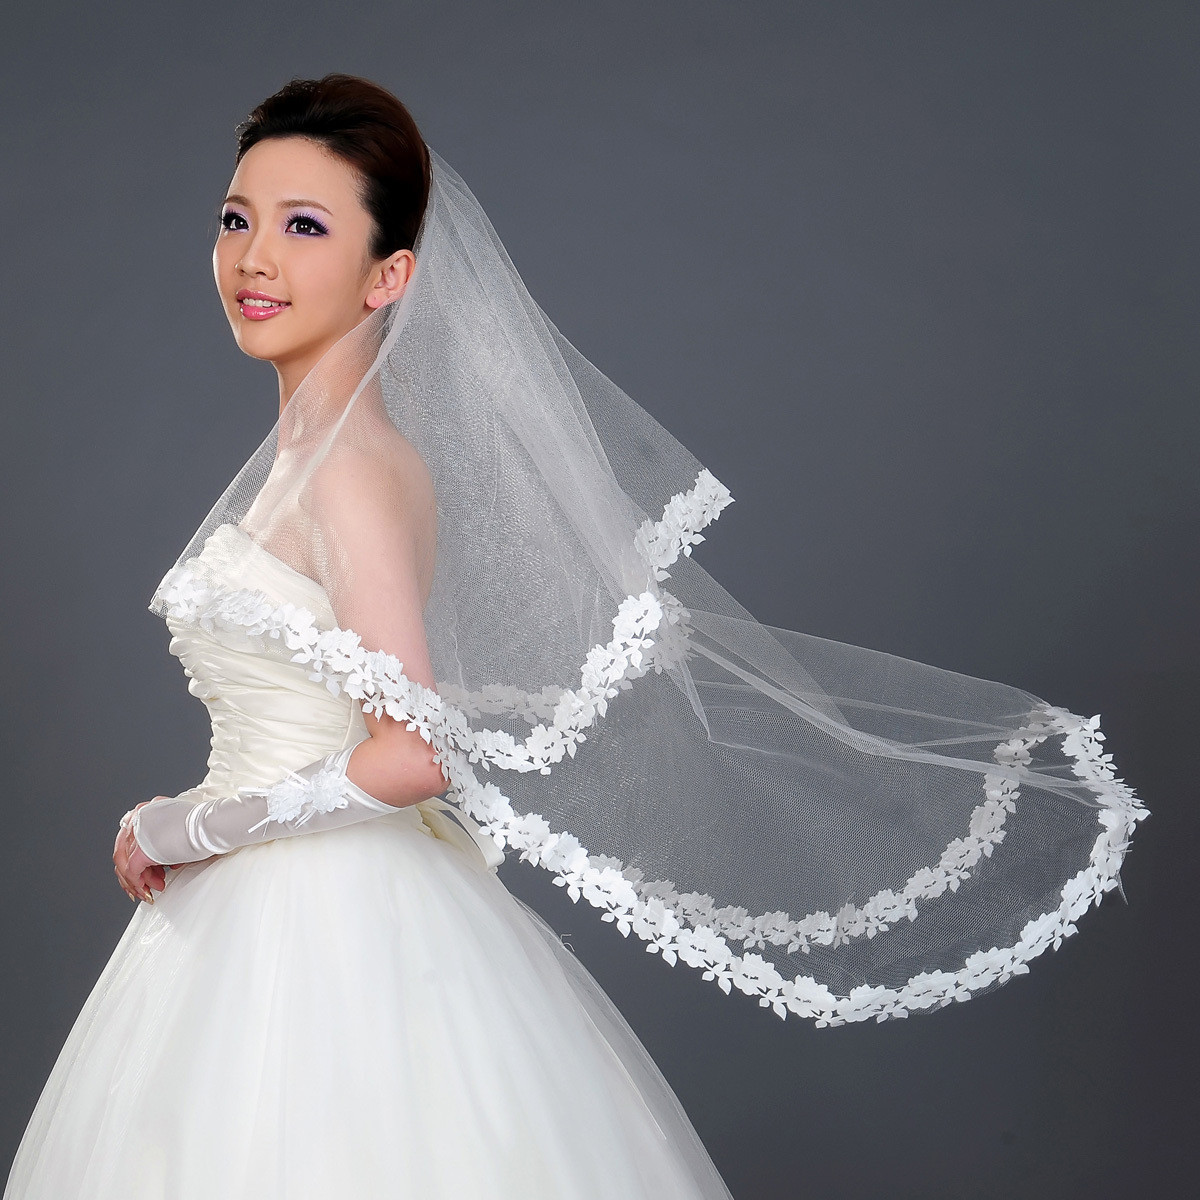 The bride wedding dress veil wedding hair accessory computer laciness veil